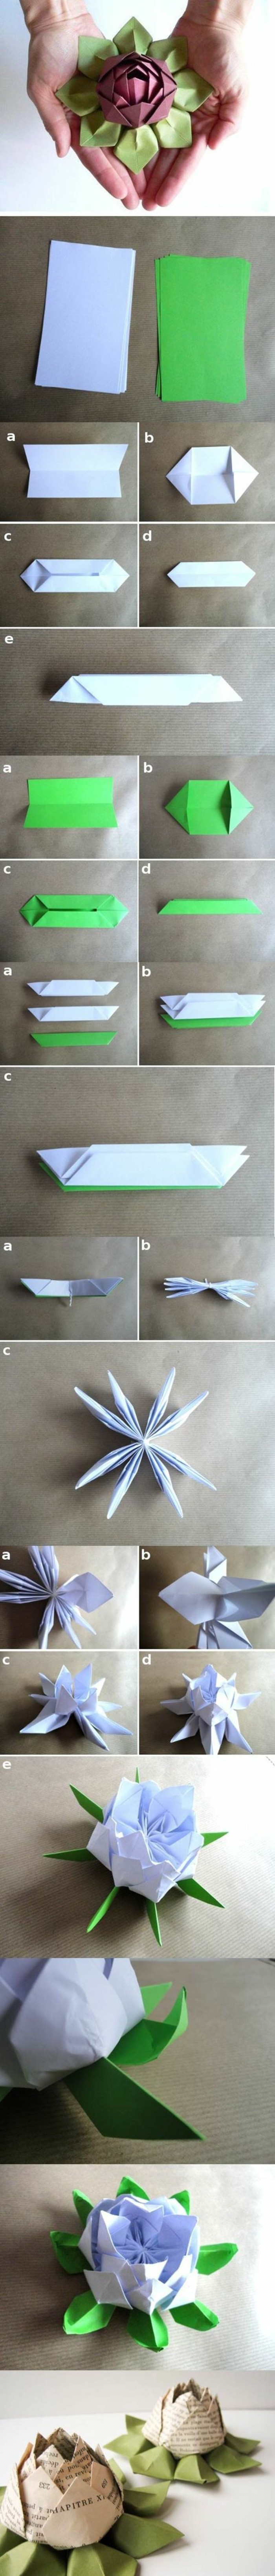 Origami nousi origami kukka-taitto tekniikka-paperi origami-taitto opetusta